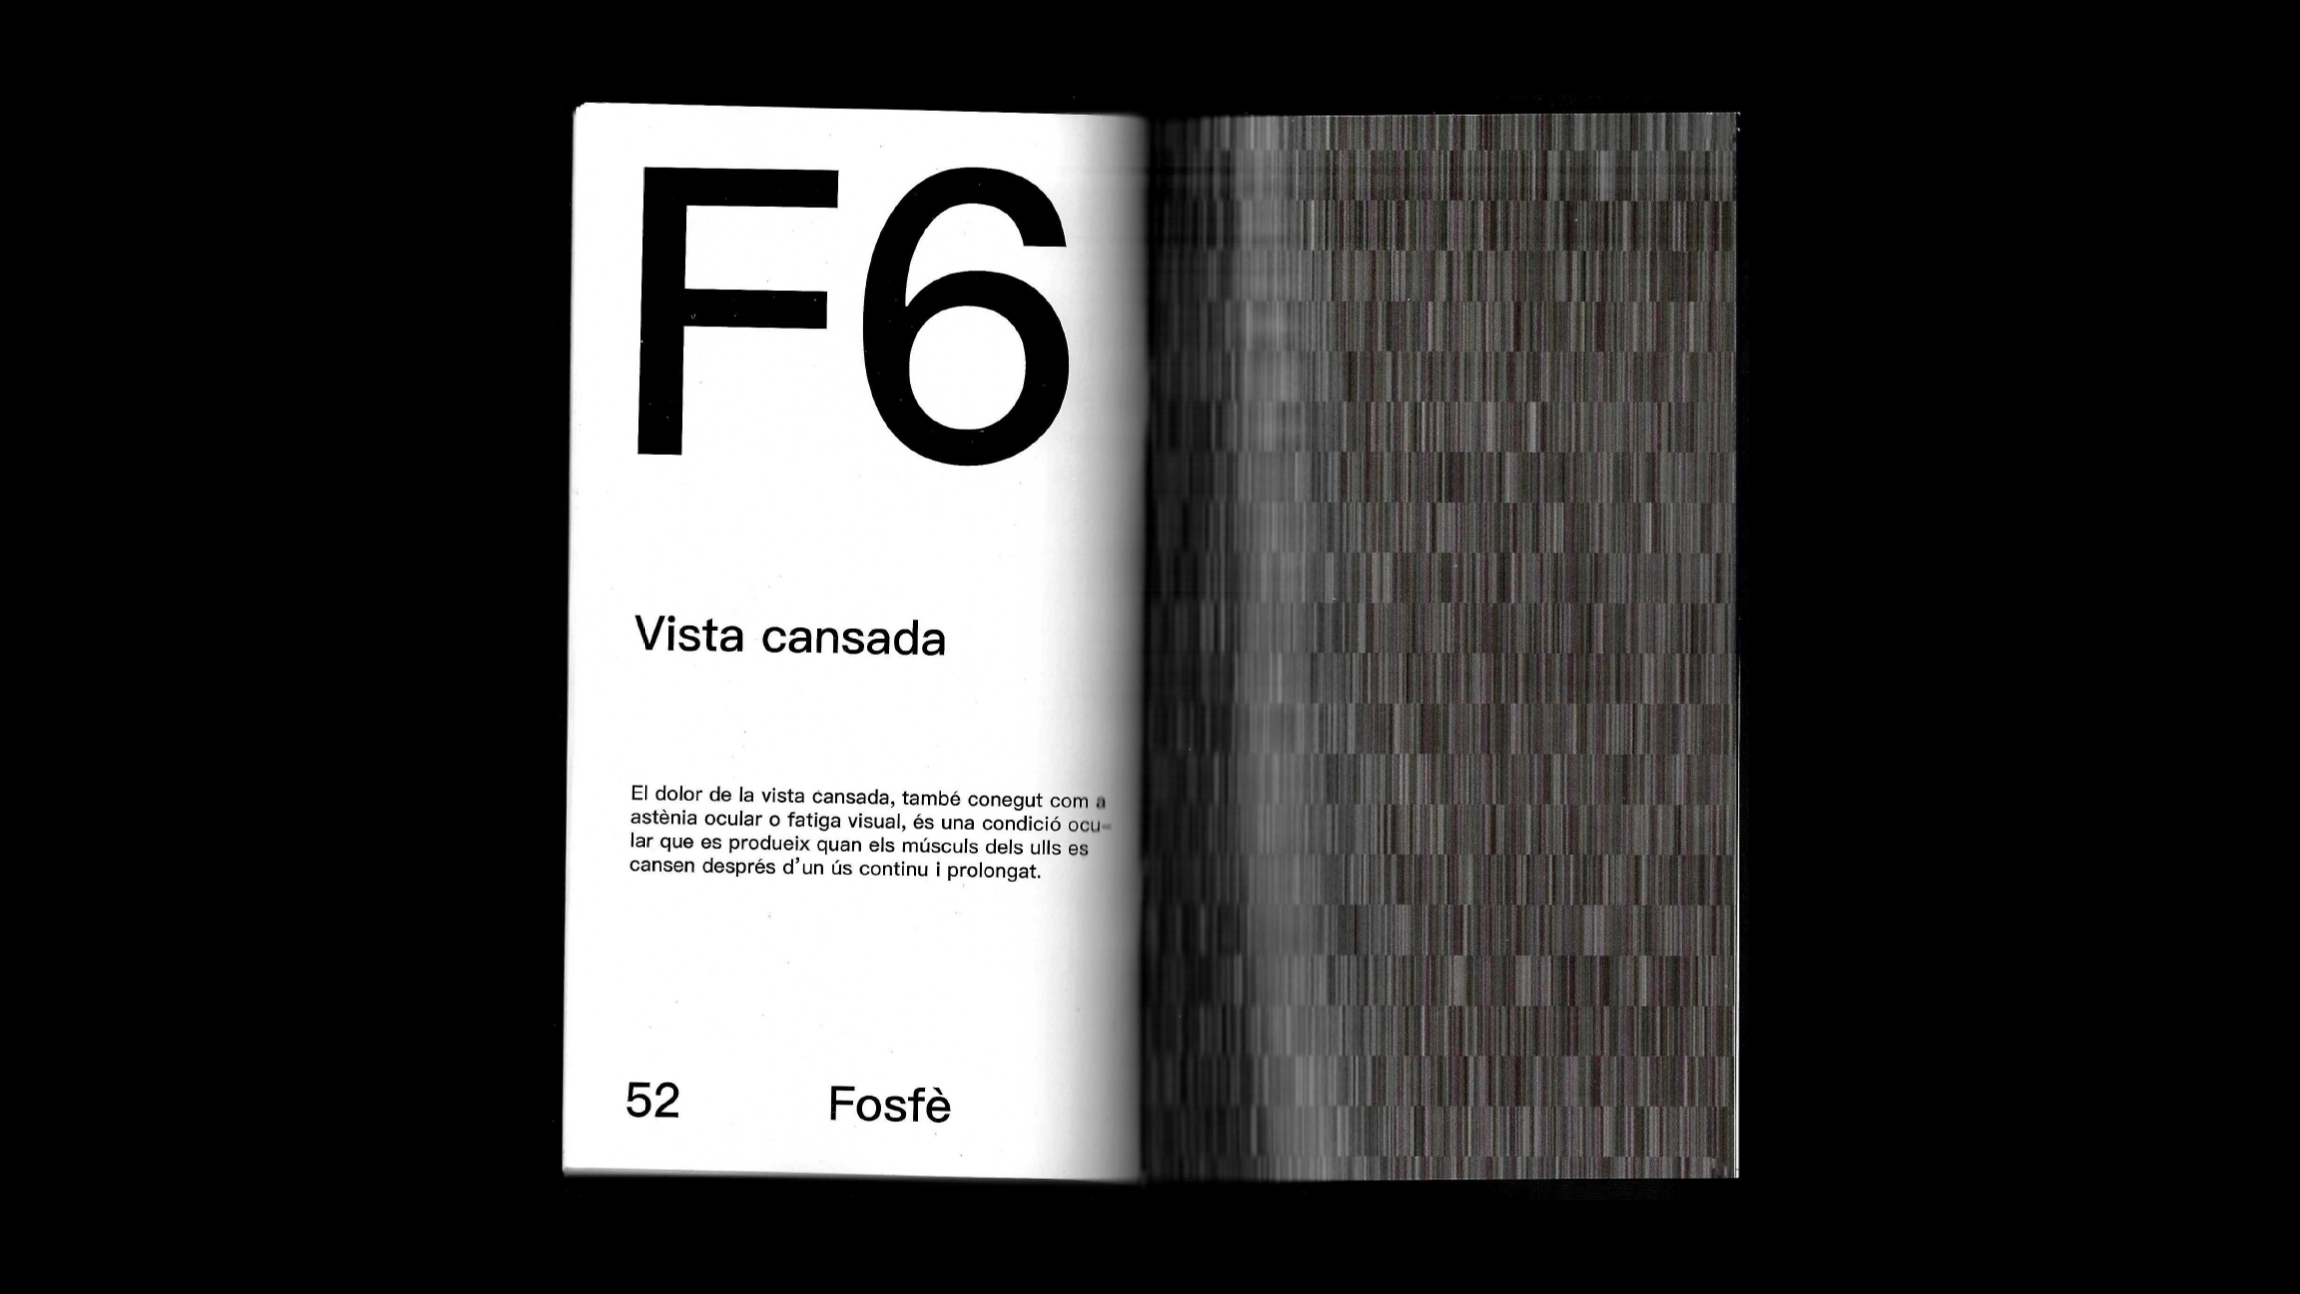 Fosfè by Martí Viñuales Guinart - Creative Work - $i